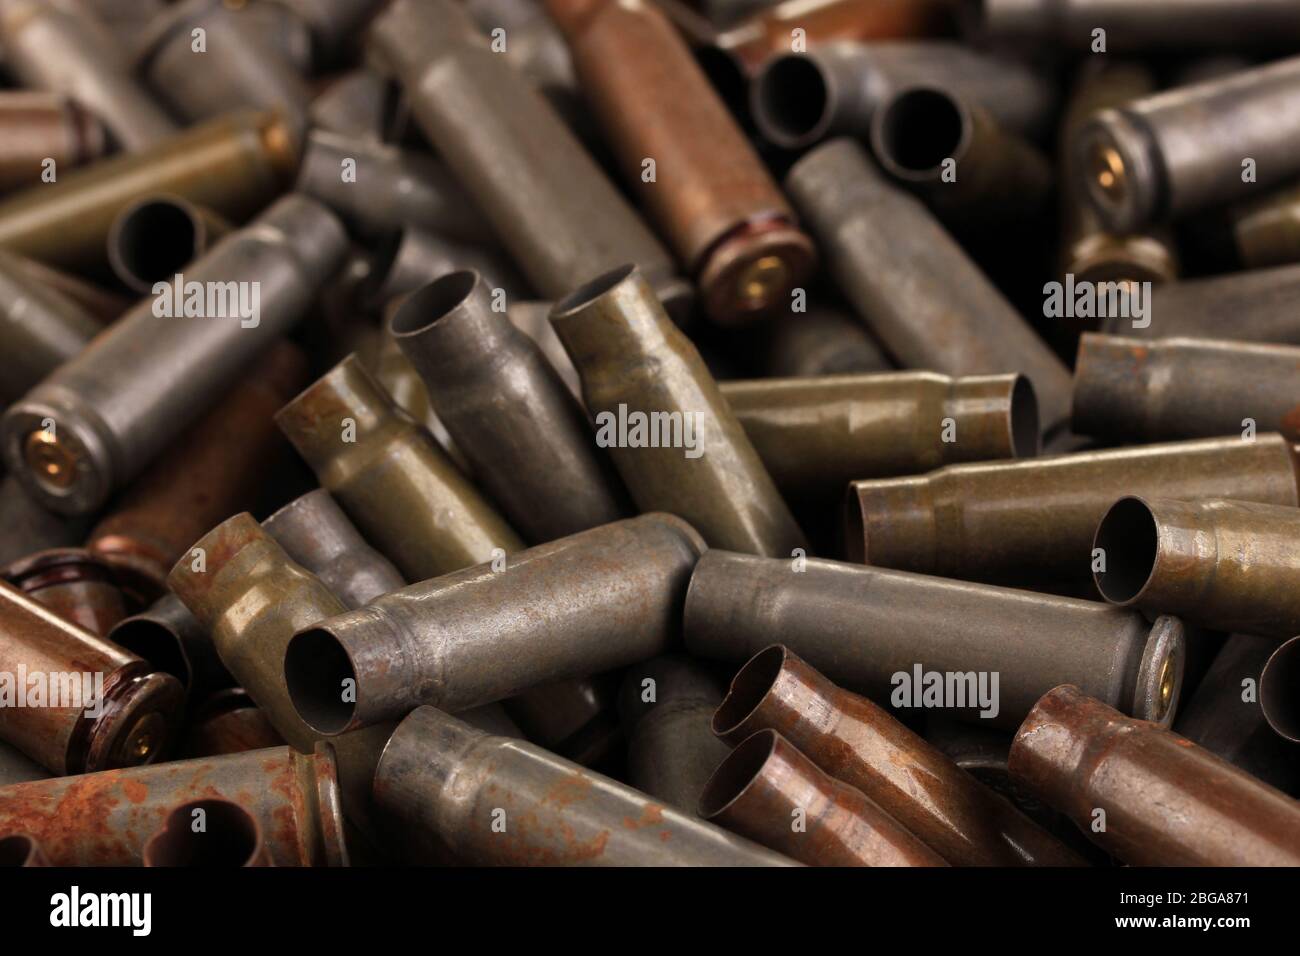 https://c8.alamy.com/comp/2BGA871/shotgun-cartridges-close-up-background-2BGA871.jpg